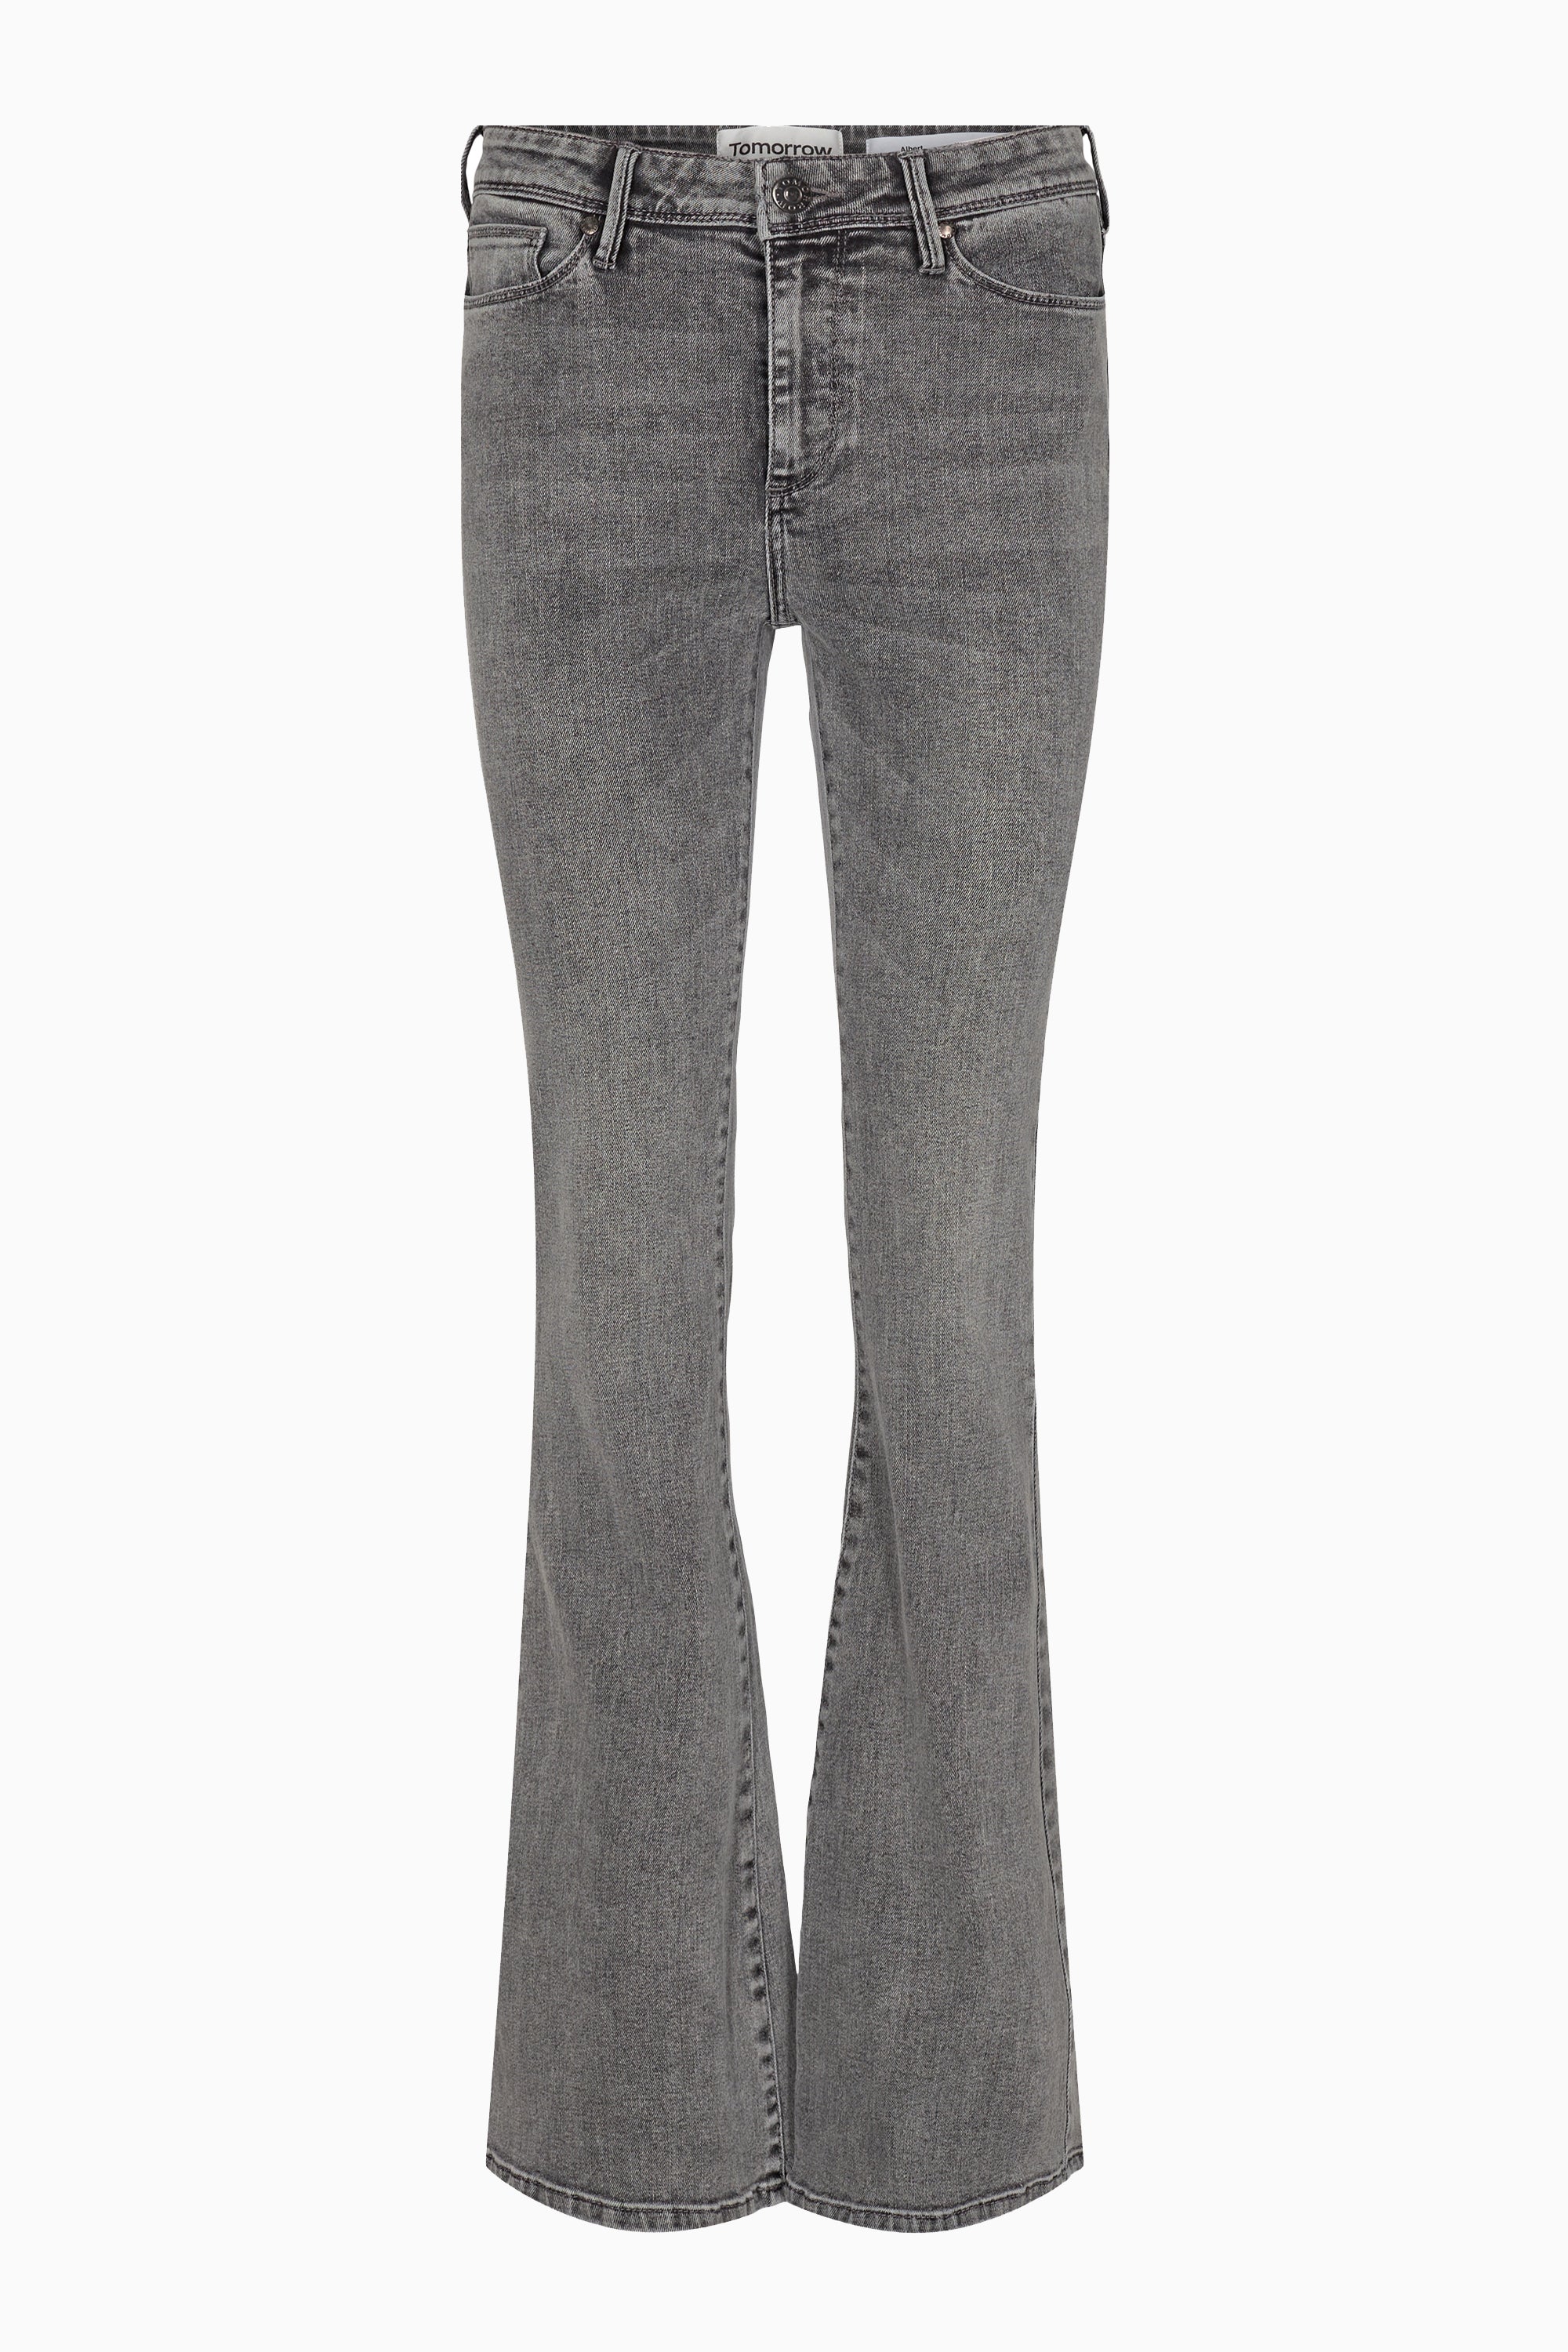 Tomorrow TRW-Albert Jeans Wash Vintage Grey Jeans & Pants 8 Grey